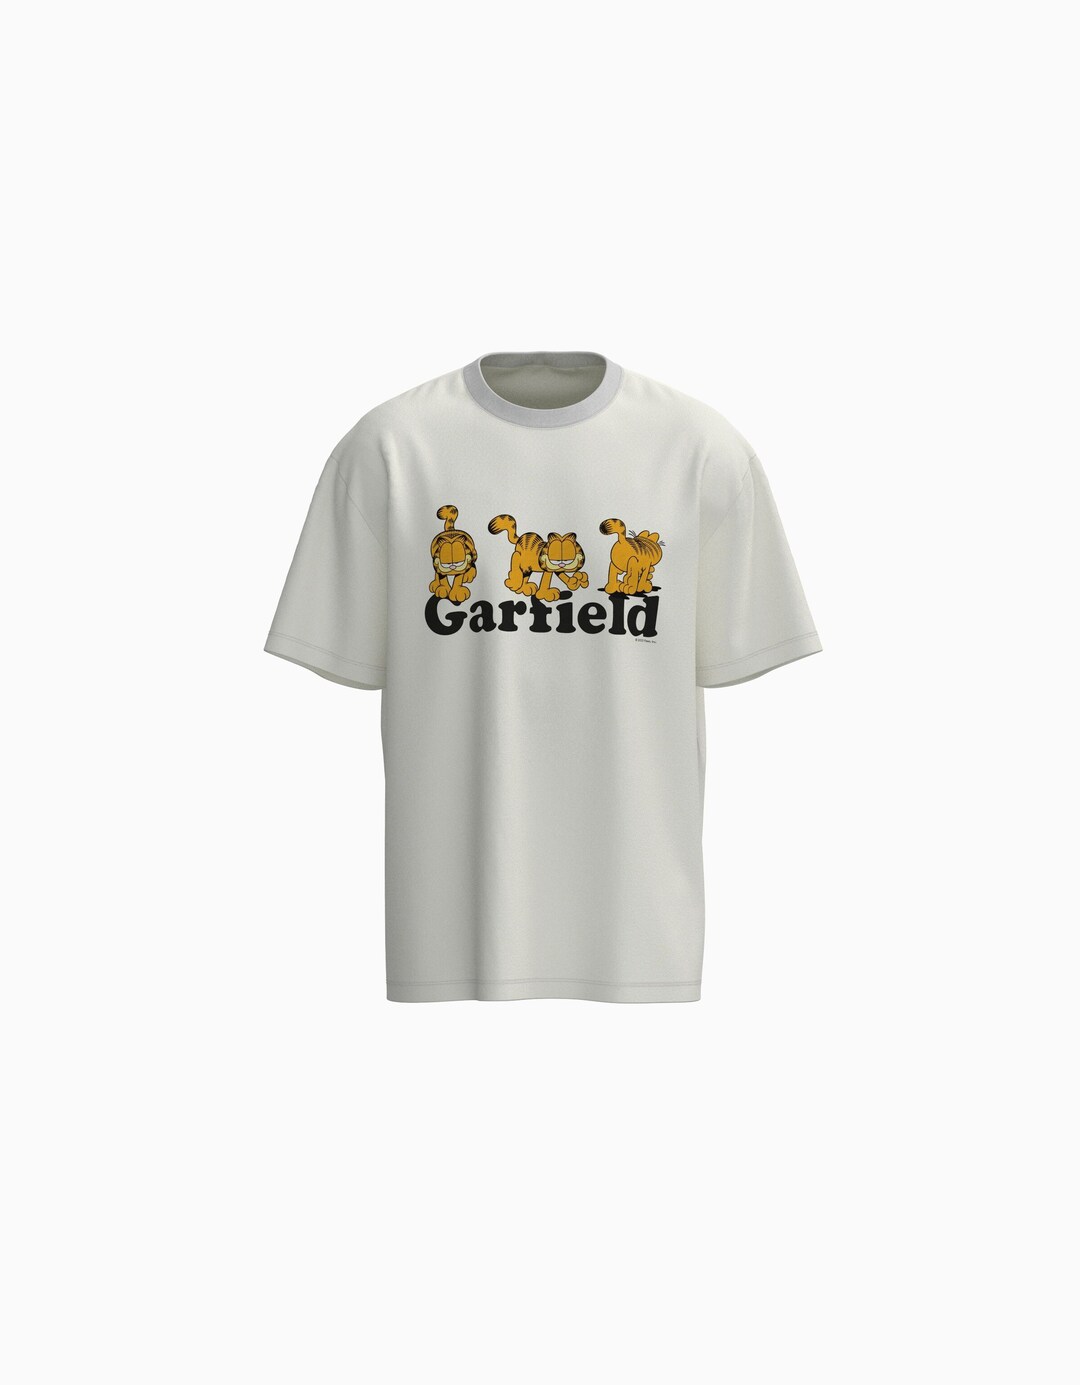 Garfield print estanpatudun kamiseta mahuka-motza, boxy fit